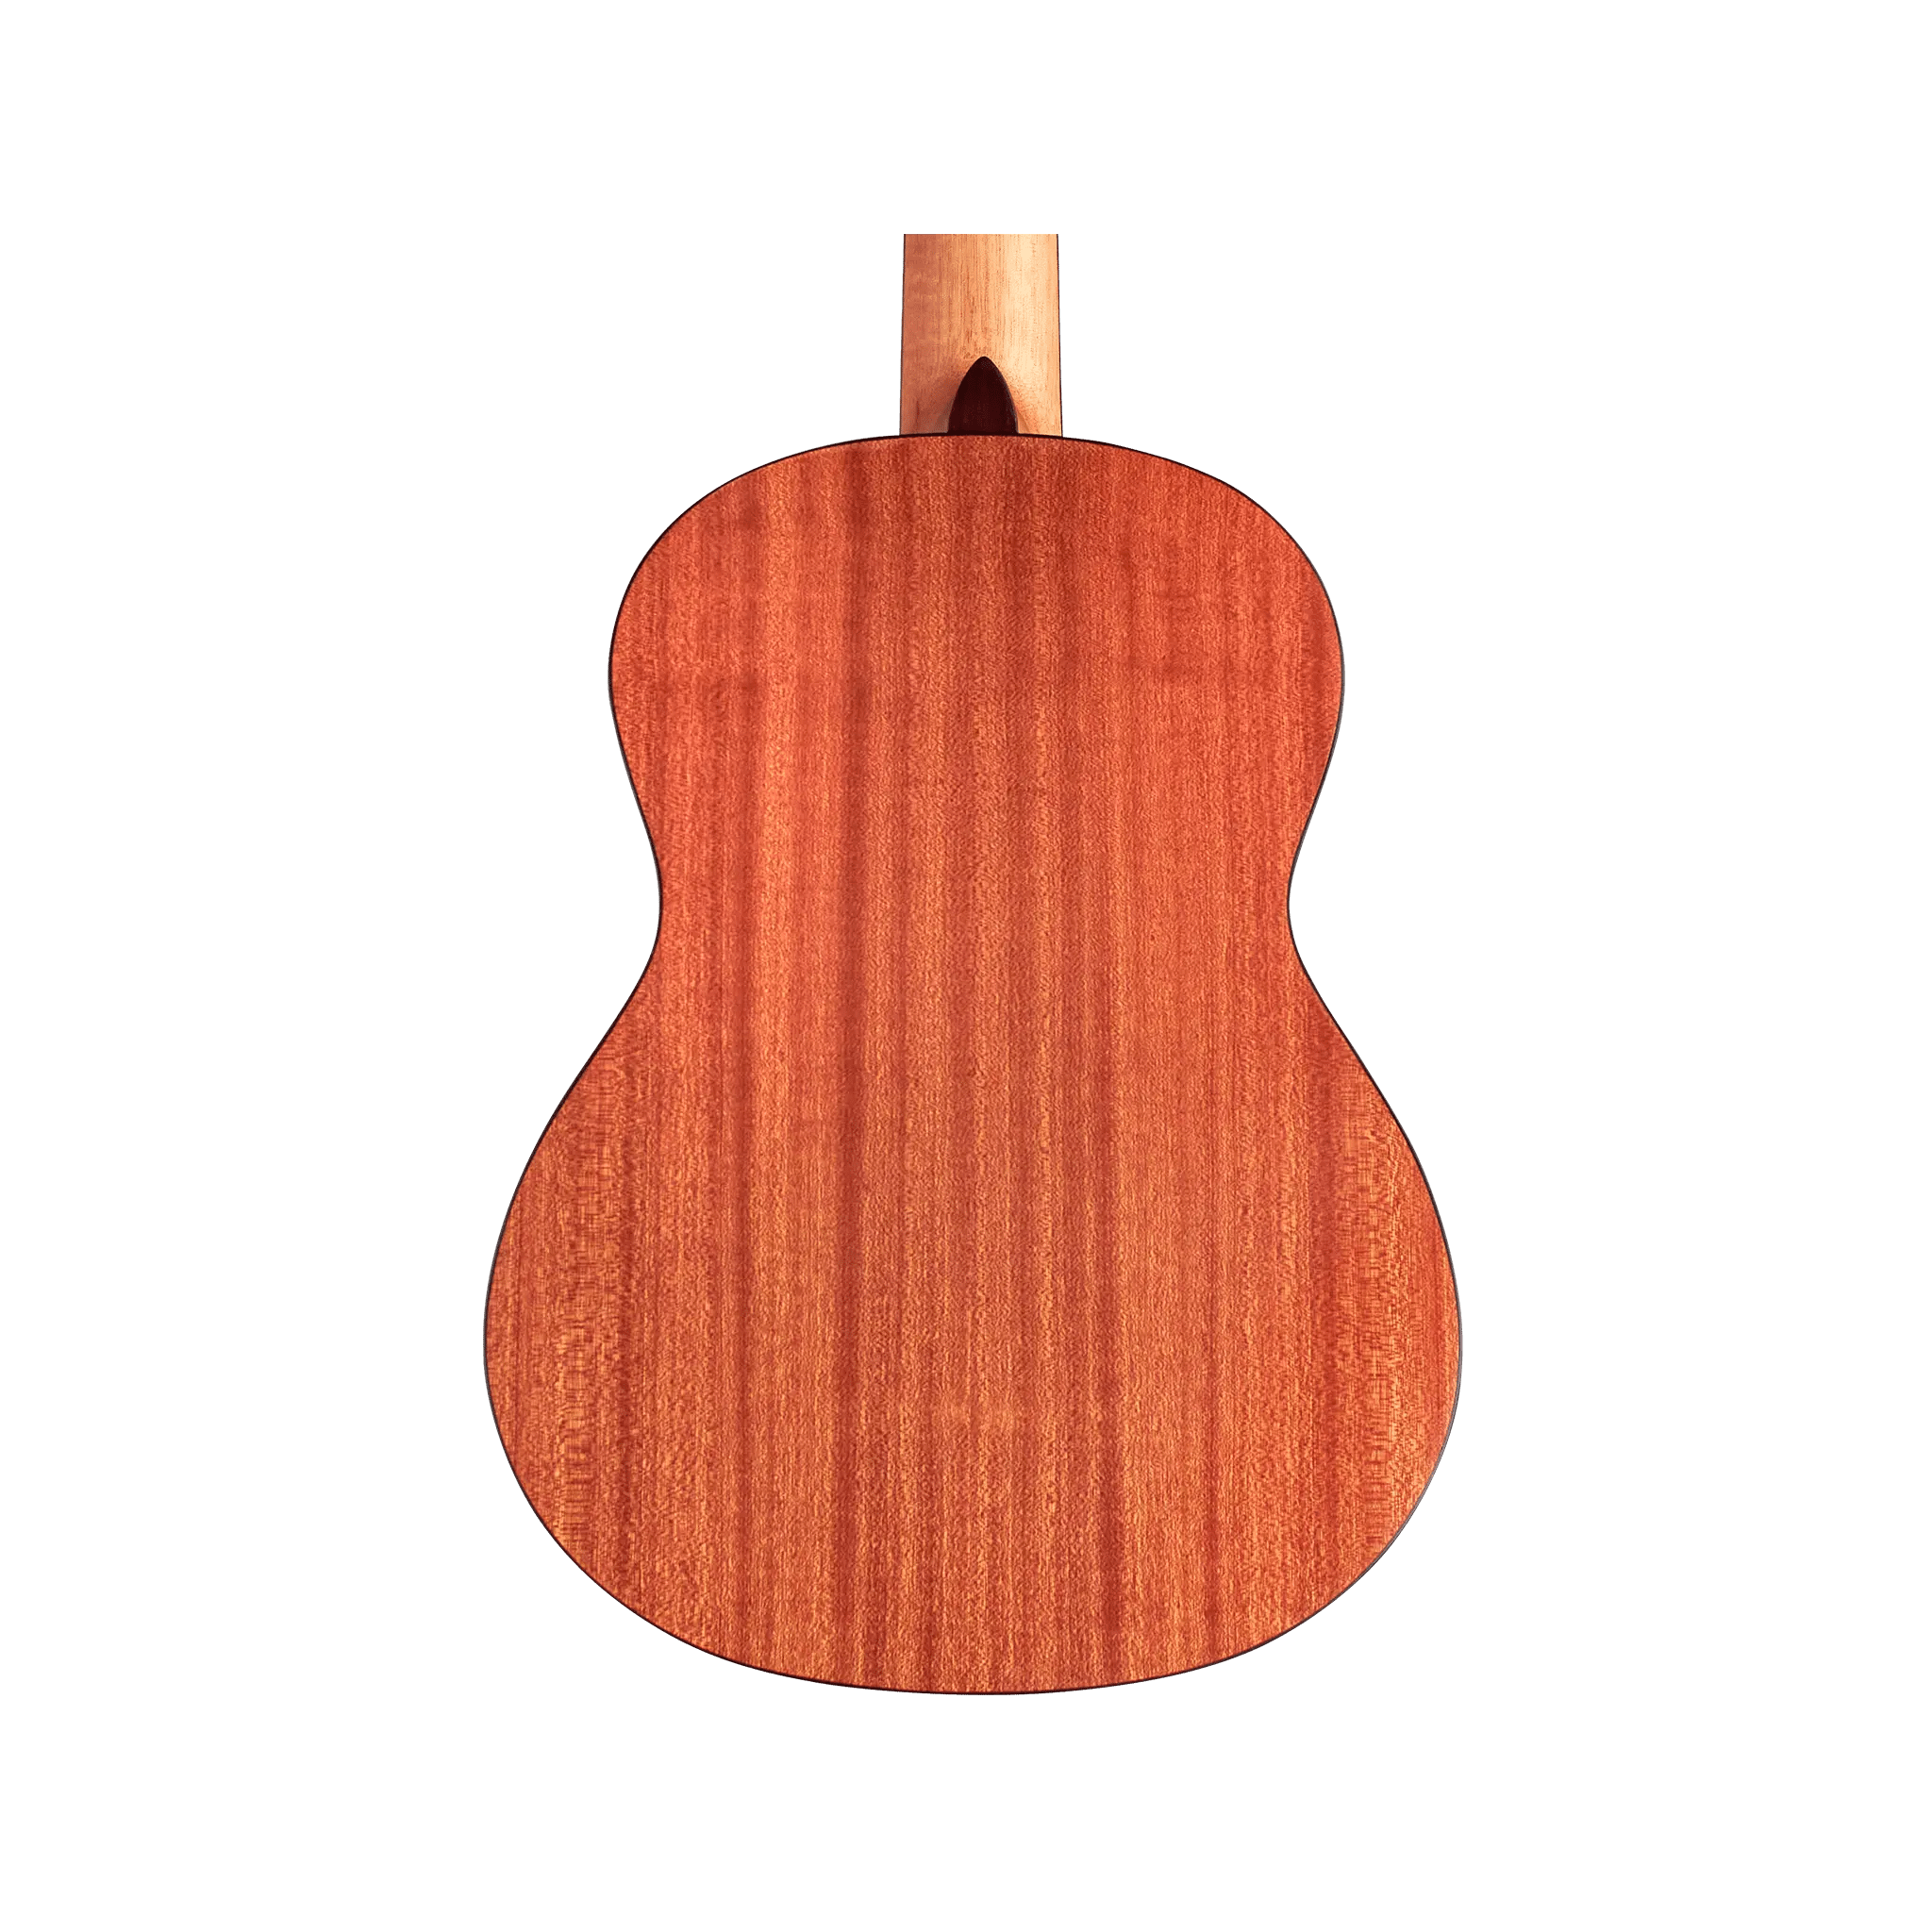 Cordoba Protege C1M 1/4 size Acoustic Guitars Cordoba Art of Guitar